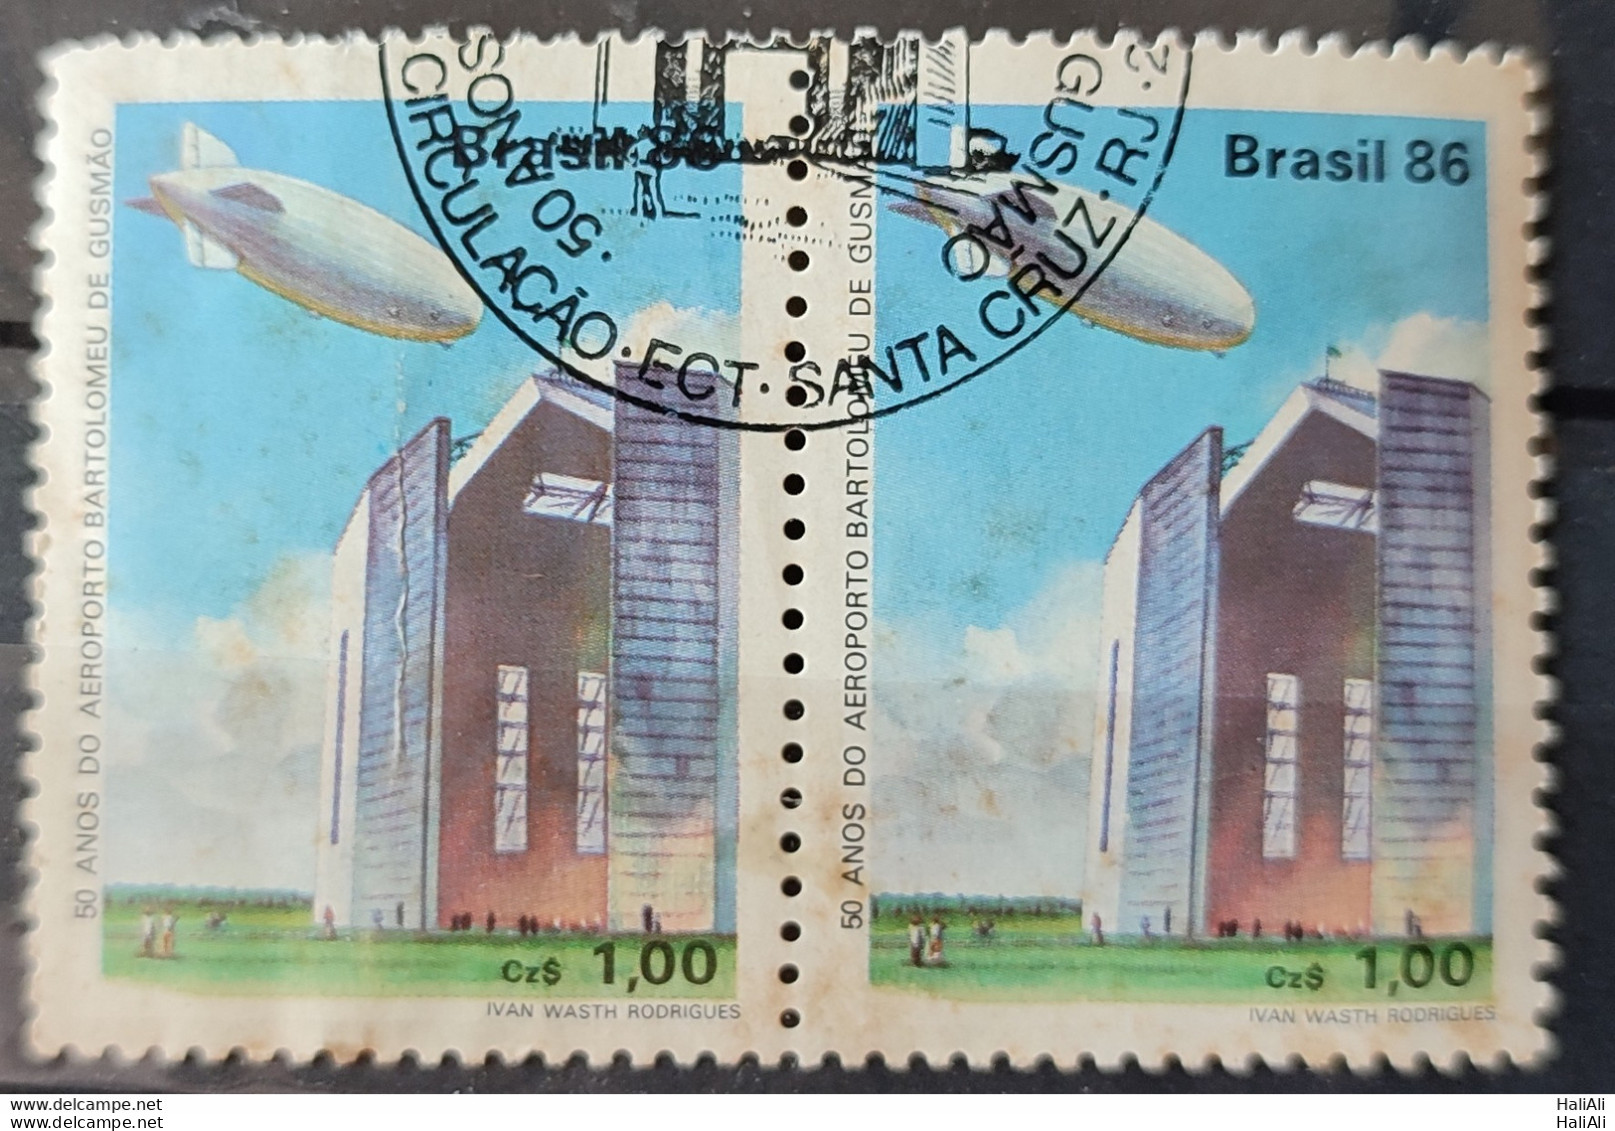 C 1541 Brazil Stamp 50 Years Airport Bartolomeu De Gusmao Balloon Hangar 1986 Dupla Circulated 2.jpg - Used Stamps